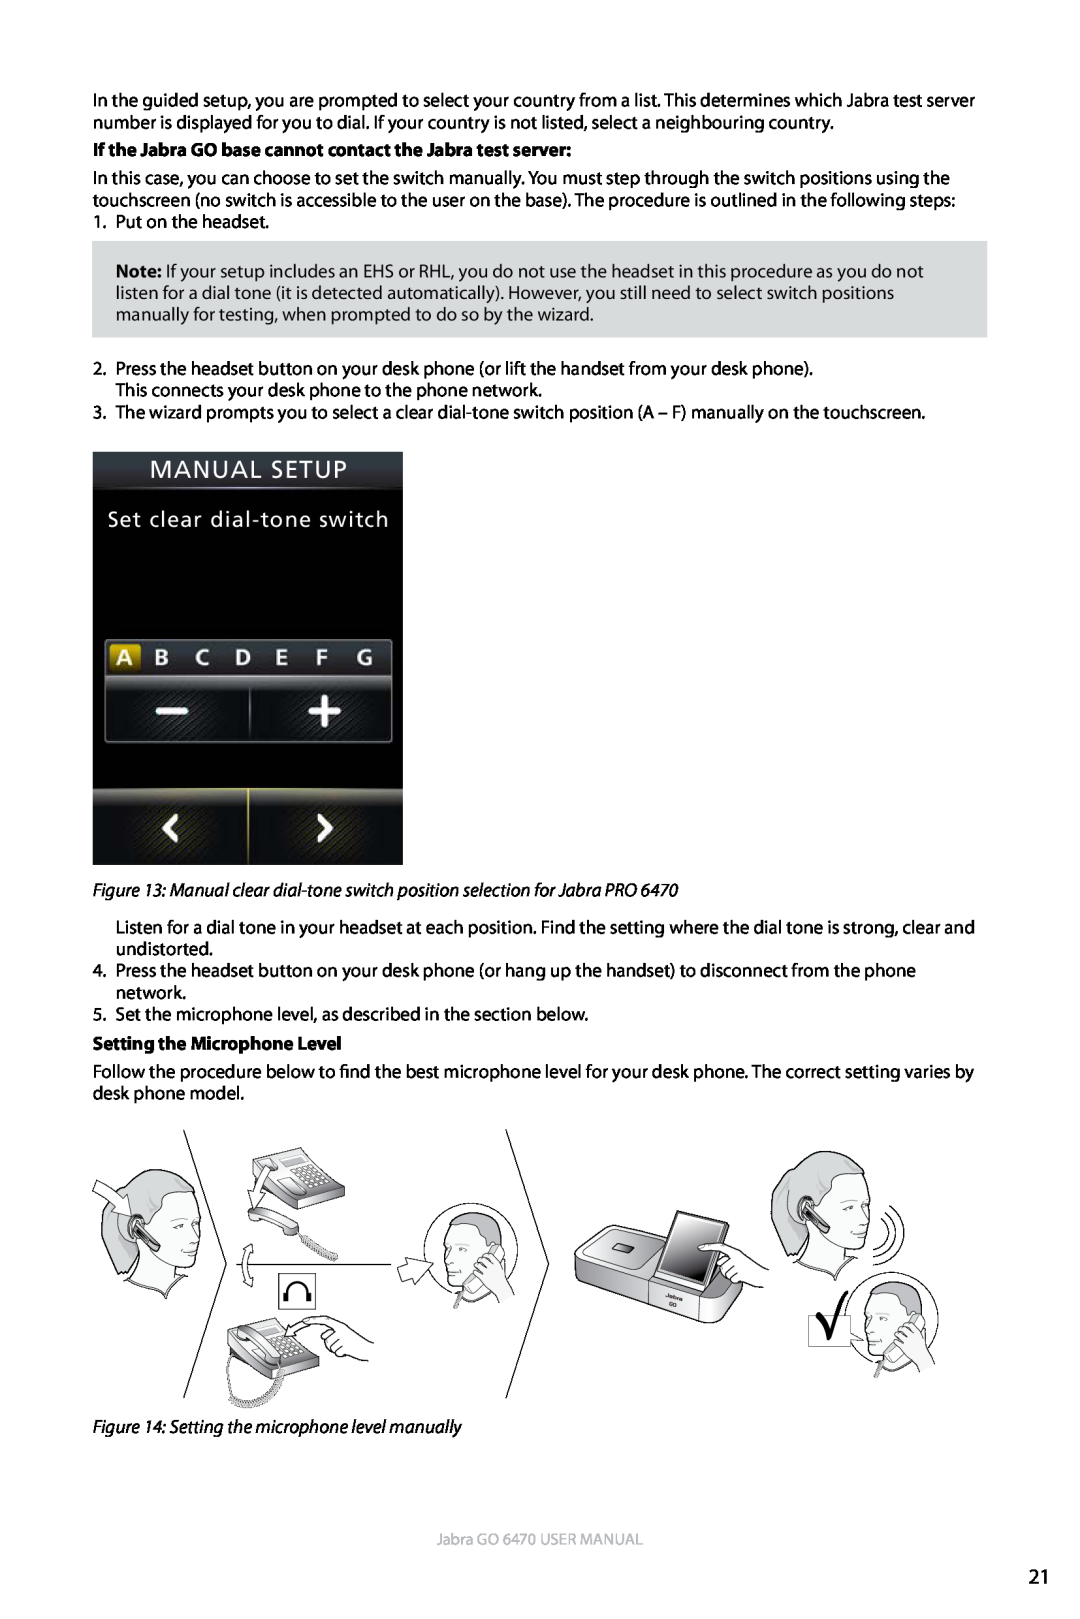 Jabra GO 6470 user manual Manual Setup, Set clear dial-toneswitch, Setting the Microphone Level 